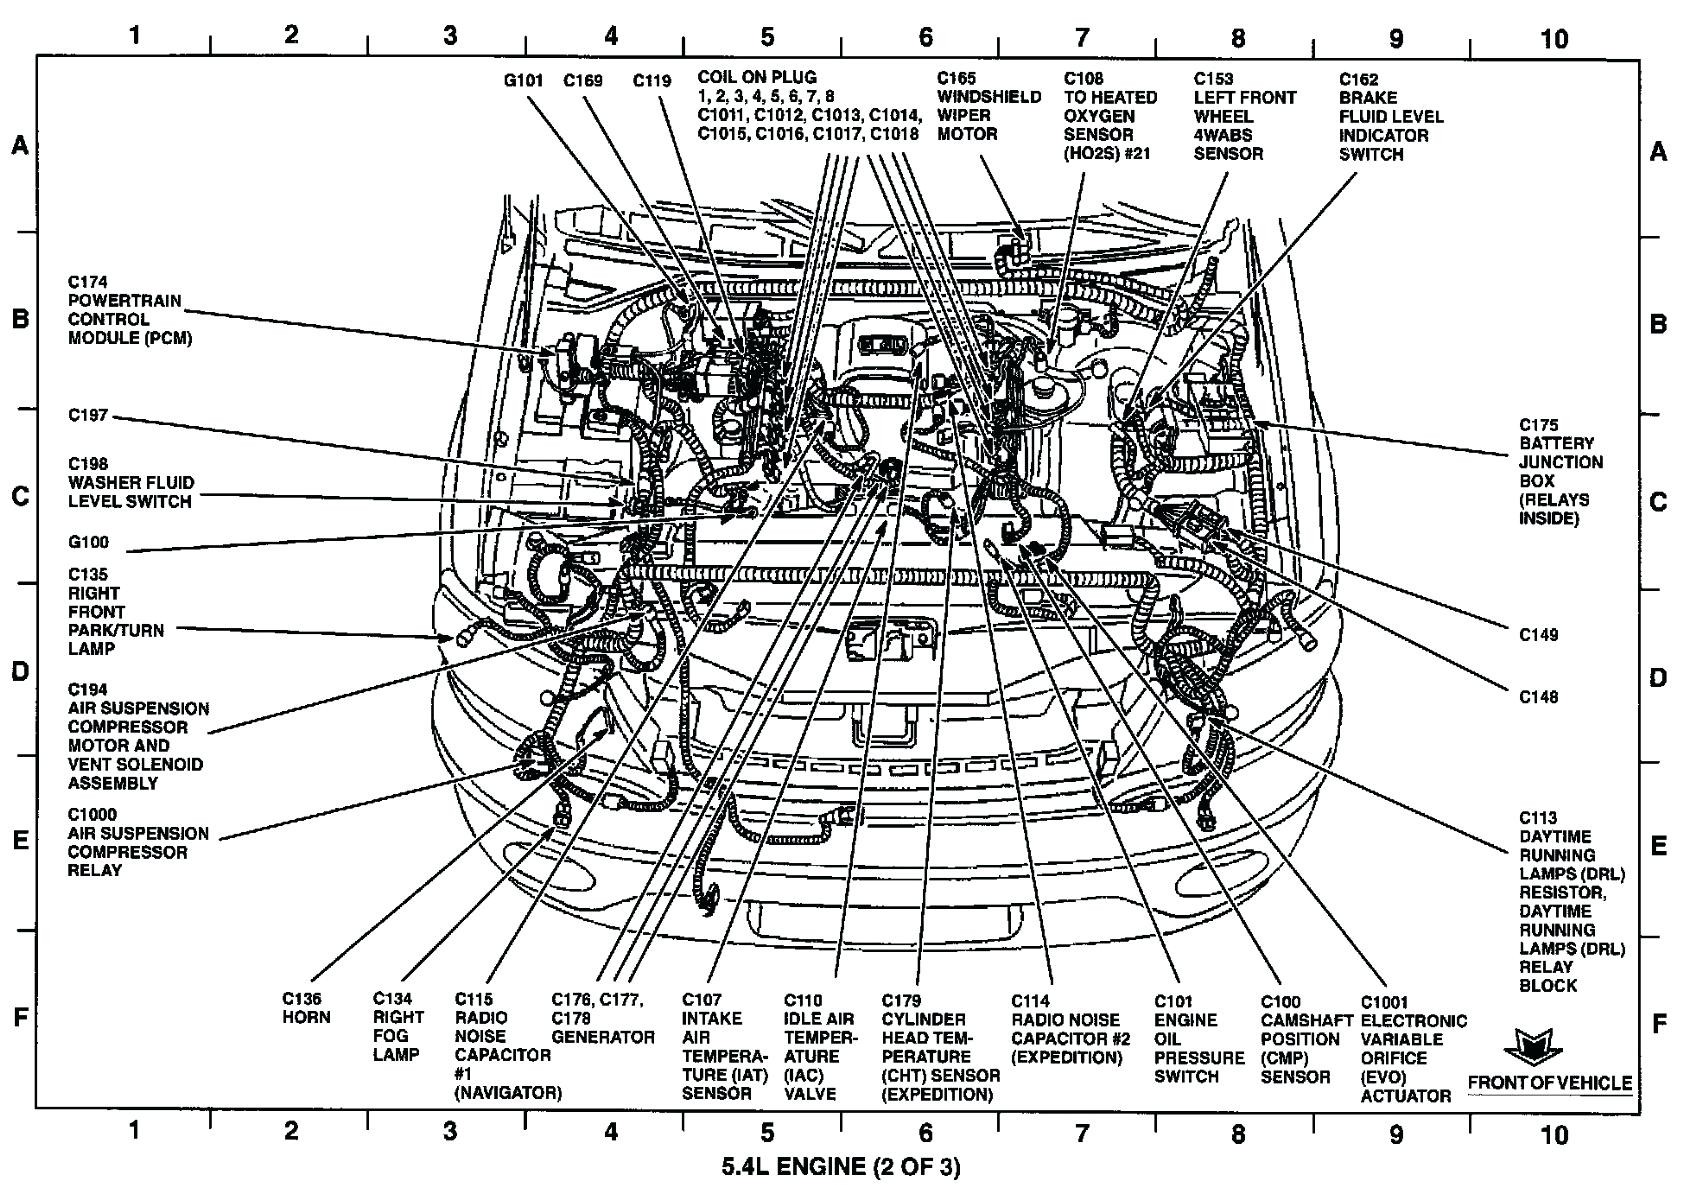 2005 ford Escape Engine Diagram ford V6 3 7 Engine Diagram Of 2005 ford Escape Engine Diagram